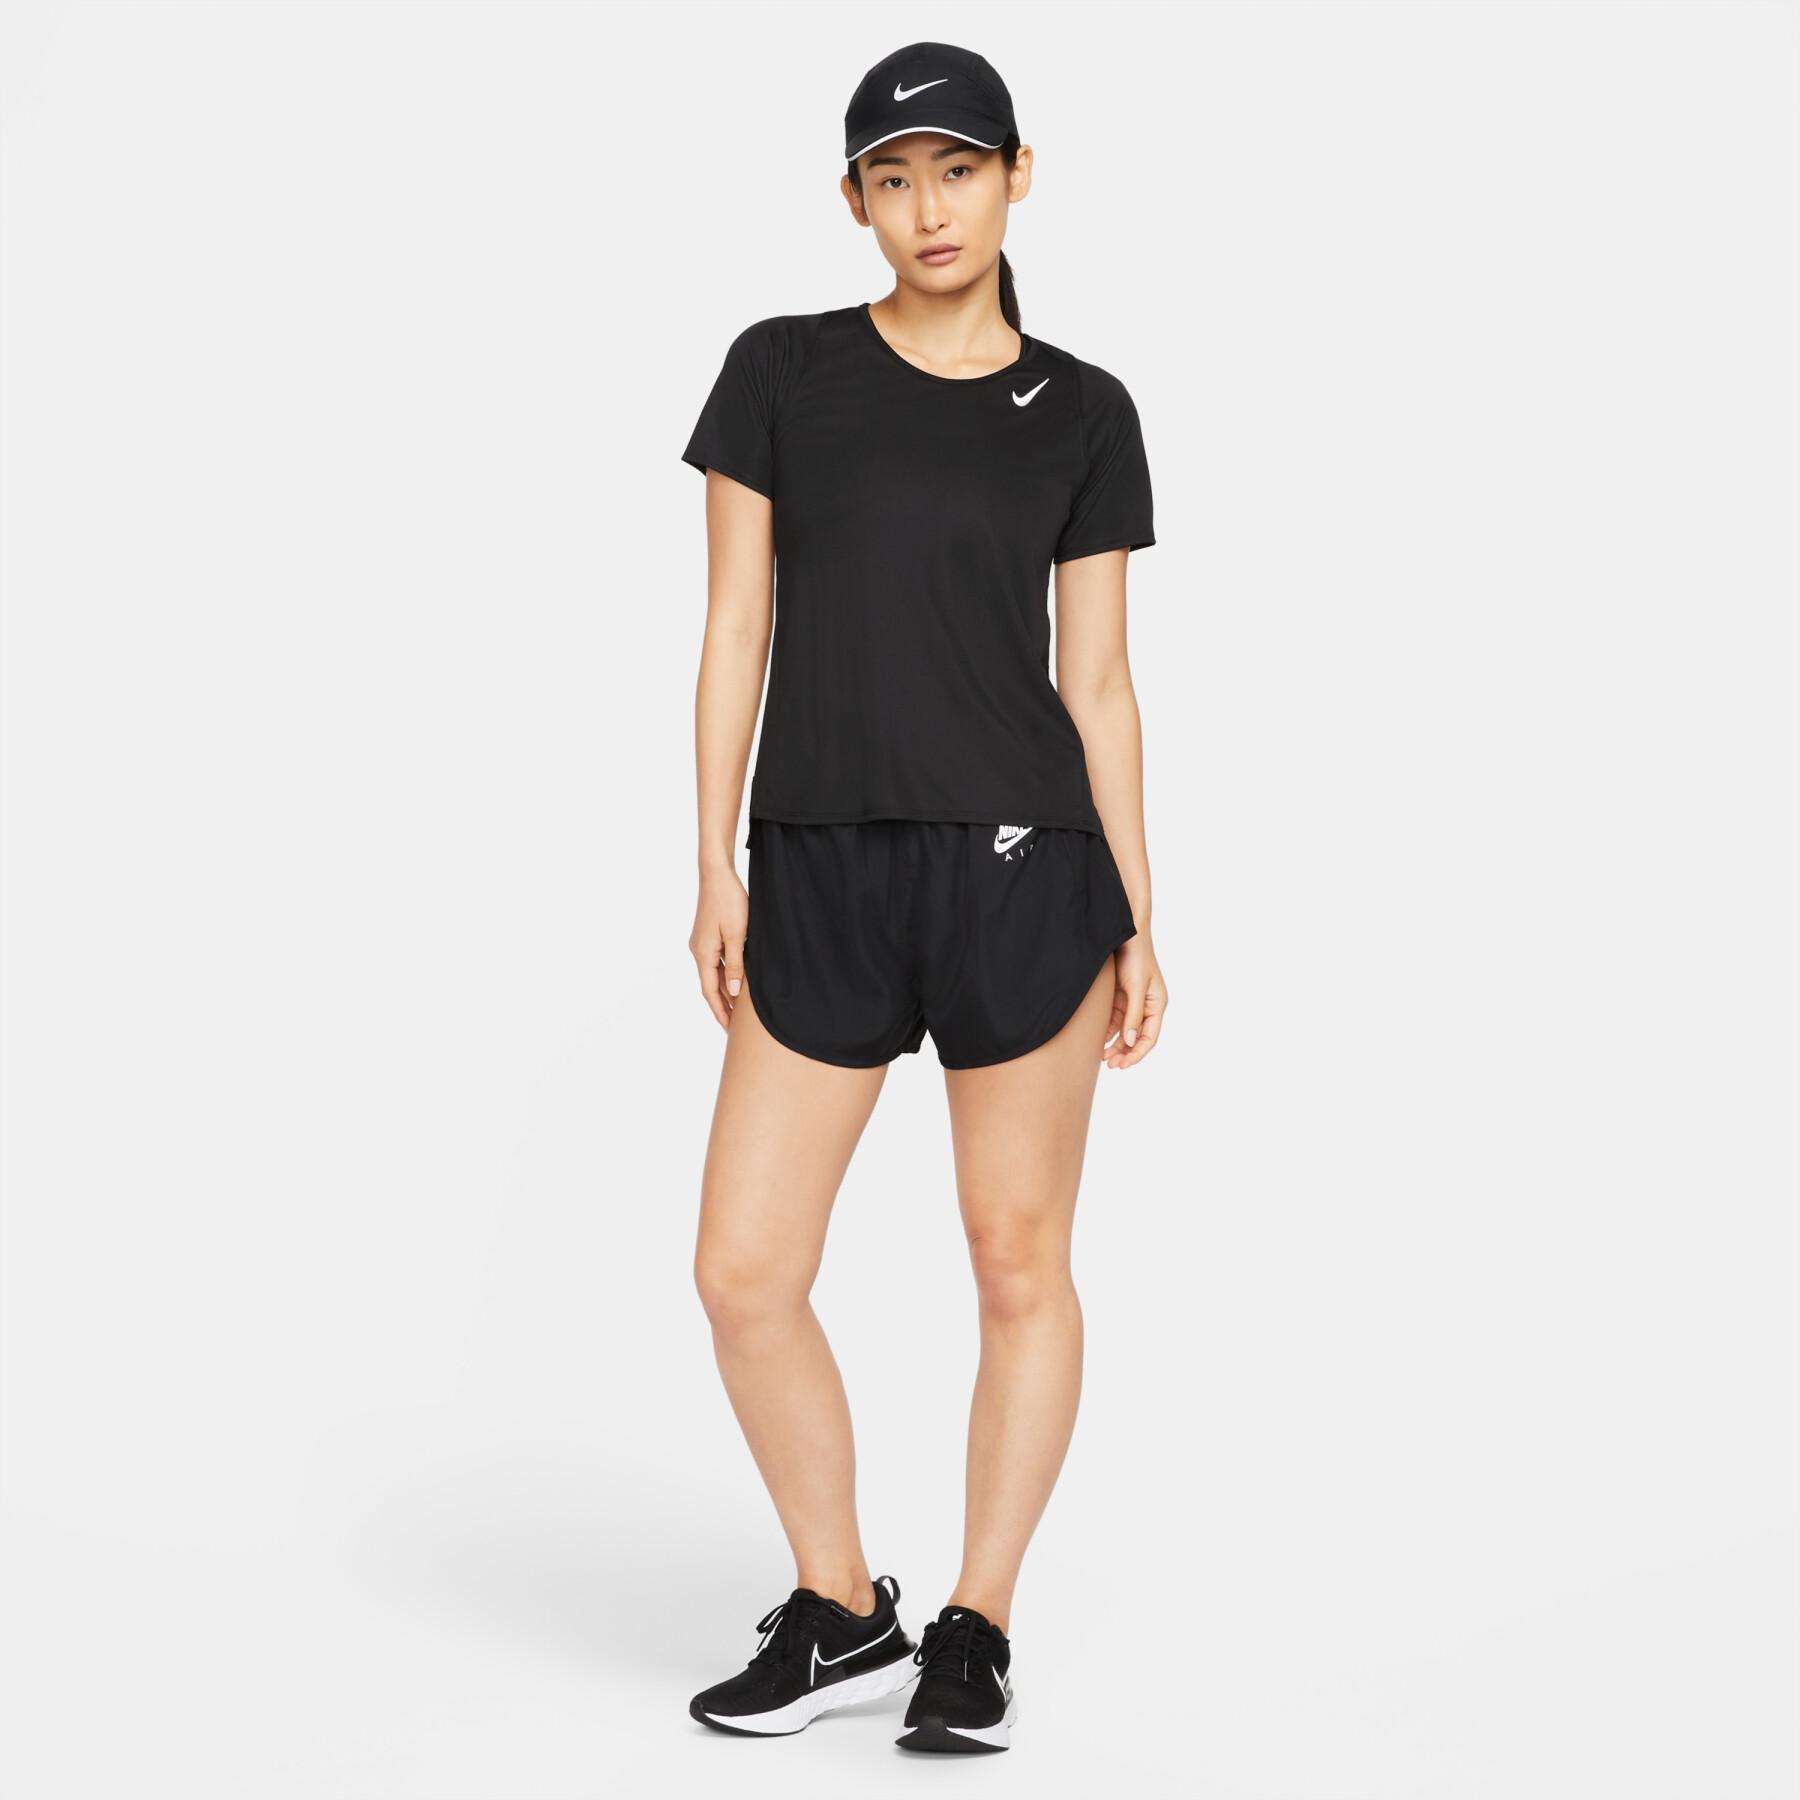 Women's T-shirt Nike dynamic fit race